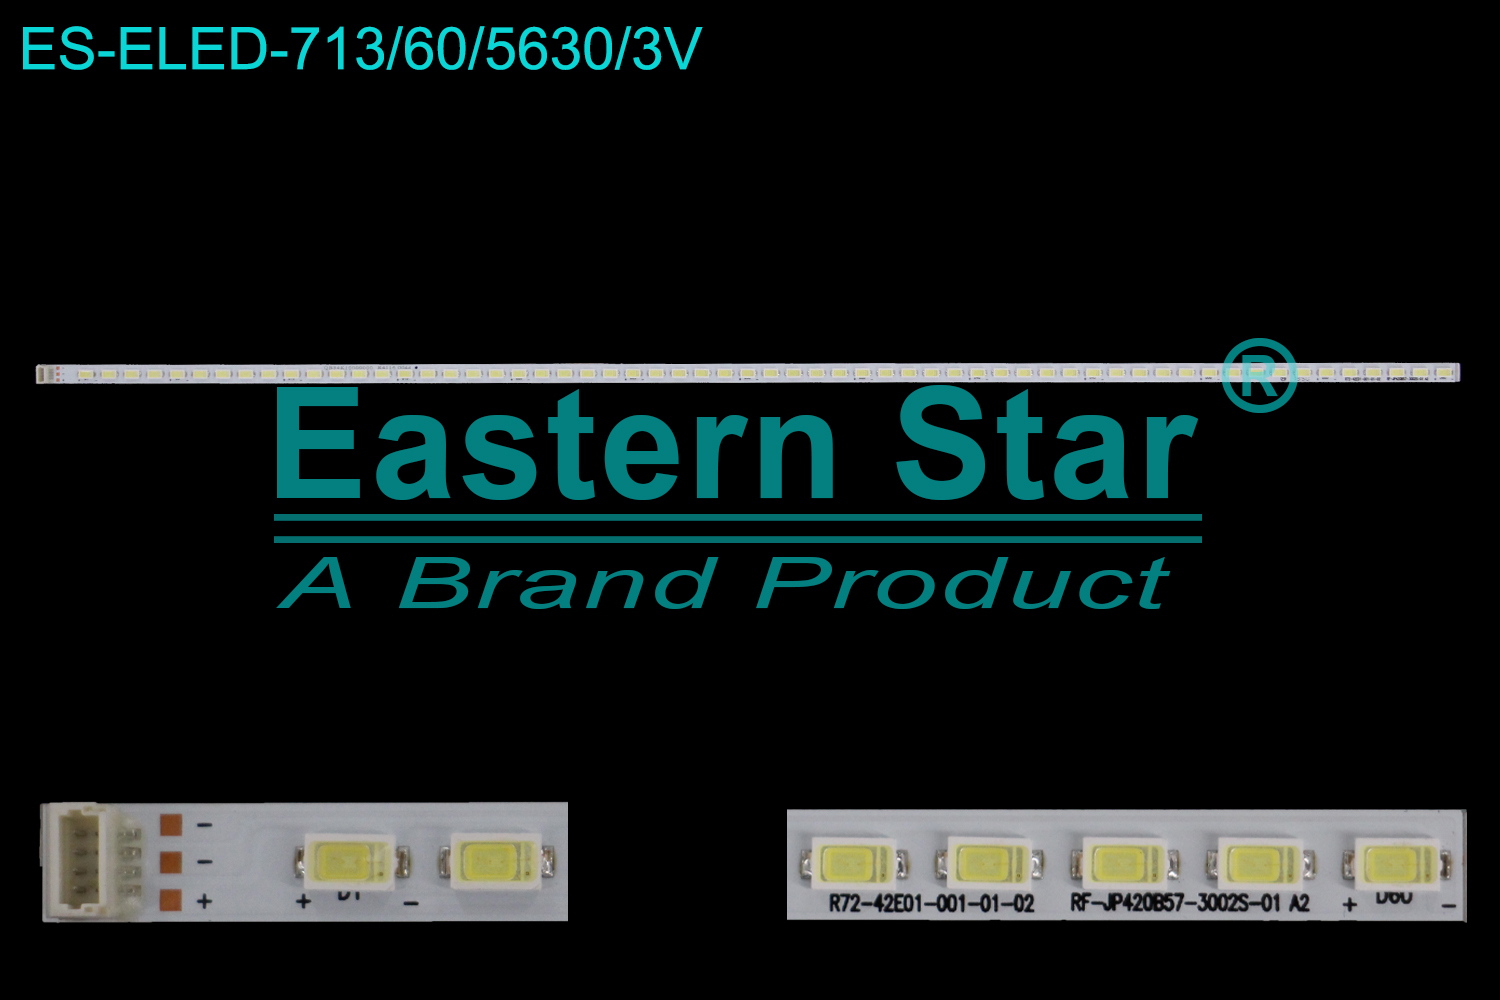 ES-ELED-713 ELED/EDGE TV backlight use for 42'' QB34K10000000 R4116 0044 R72-42E01-001-01-02 RF-JP420B57-3002S-01 A2  LED STRIPS(1)